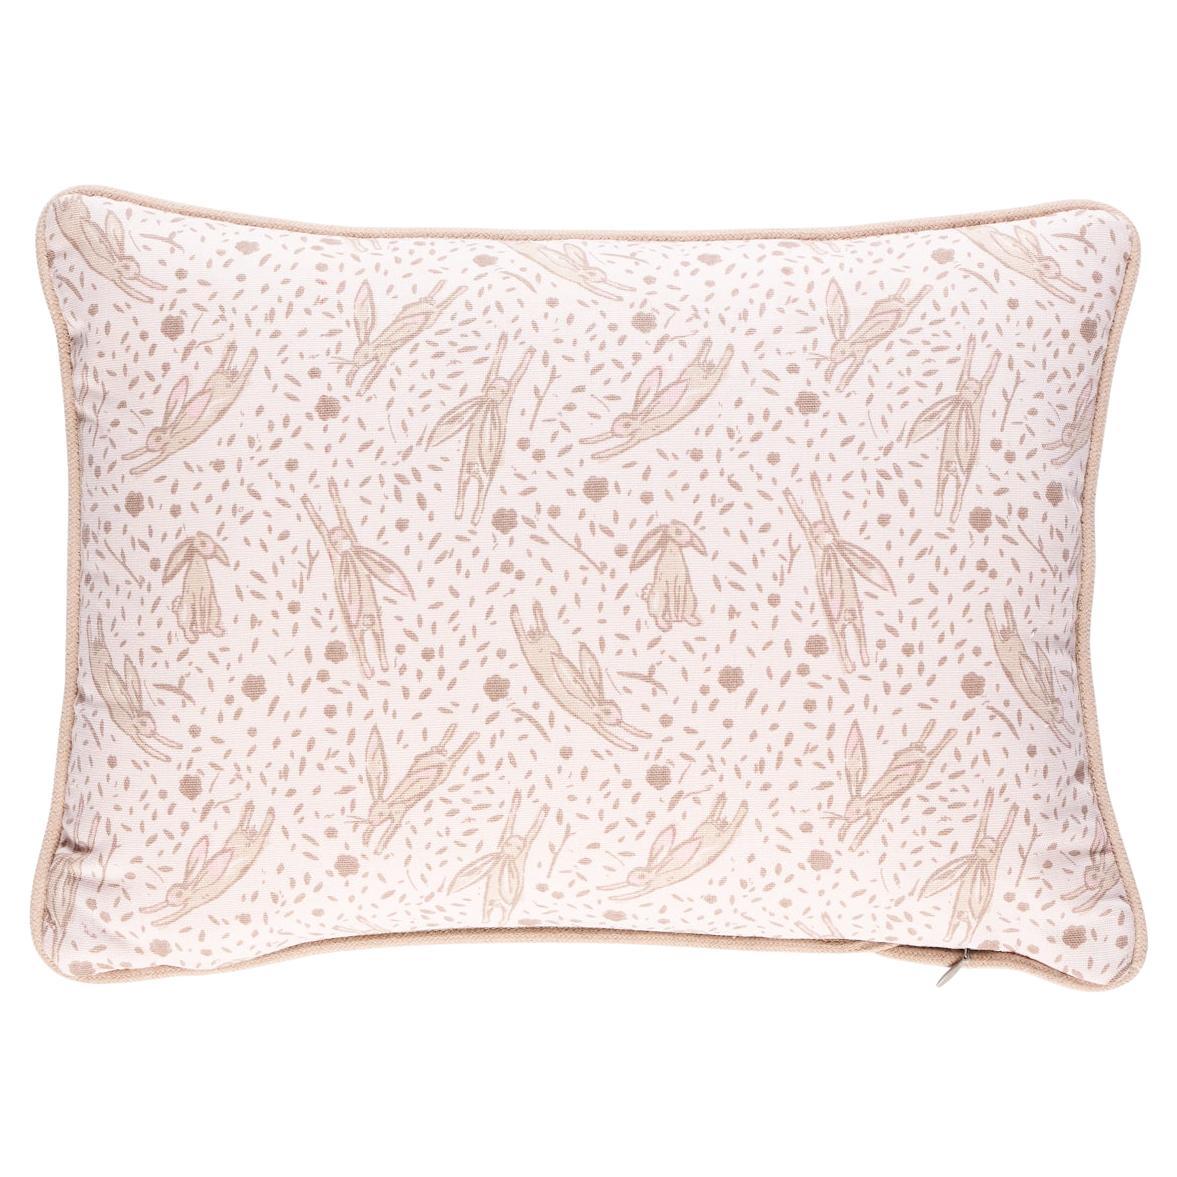 Schumacher x Marie-Chantal Rabbit Print 16 x 12" Pillow in Blush For Sale